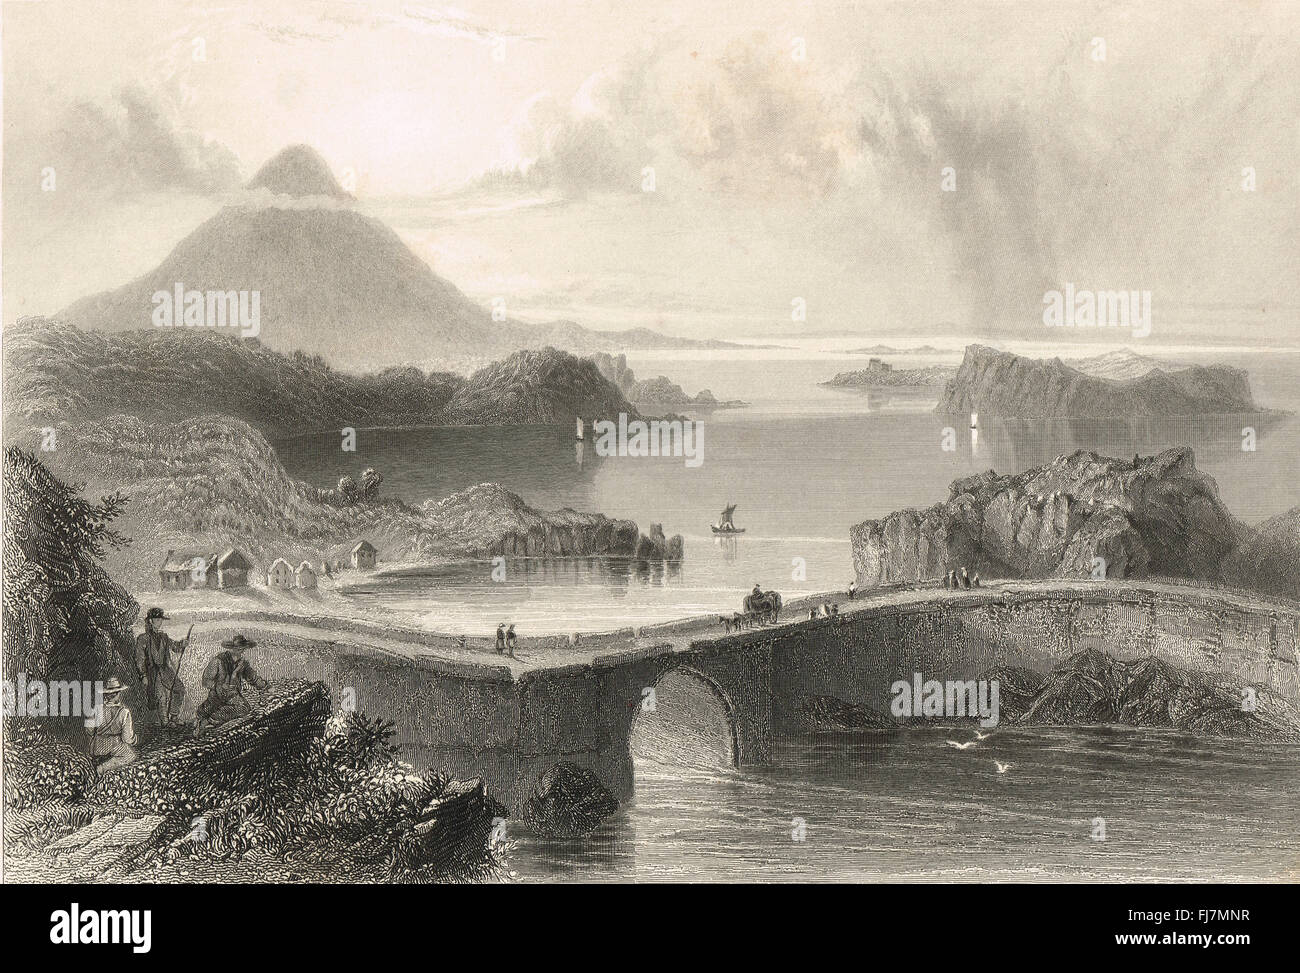 Gravur der Ponton-Brücke, Lough Conn, County Mayo, Irland 1841 Stockfoto